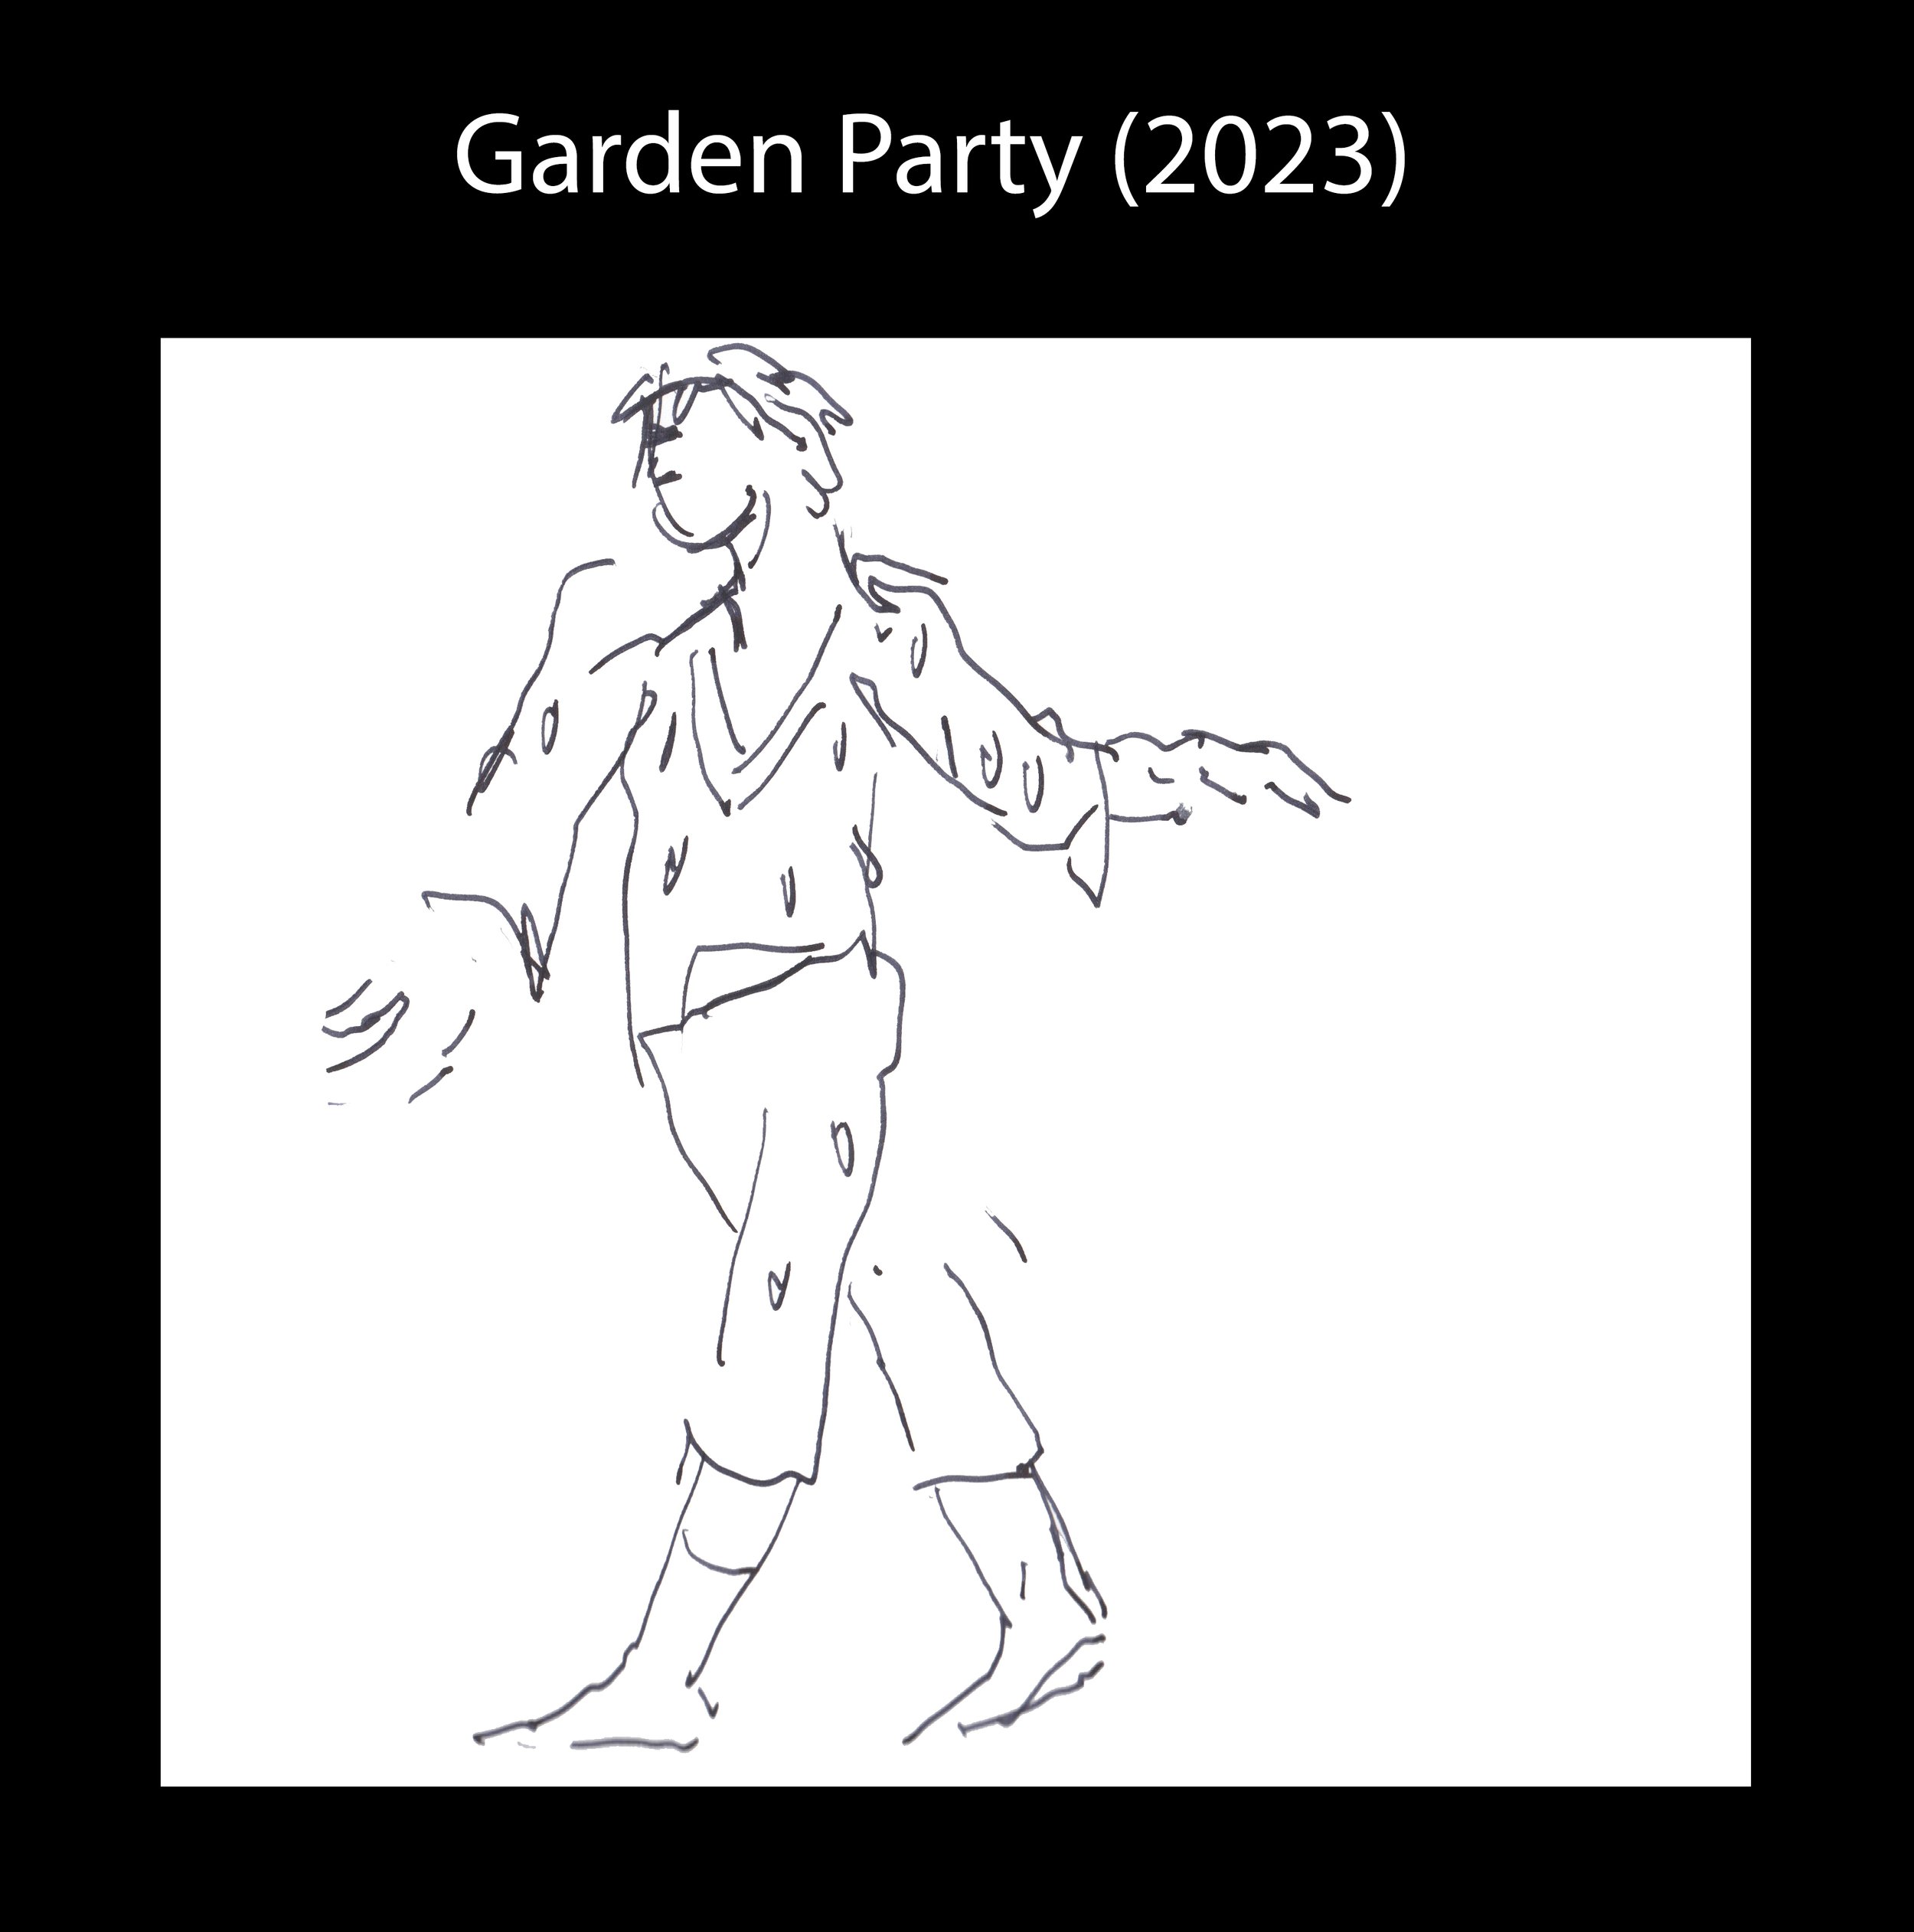 Douglas drawing garden for website 2023.jpg